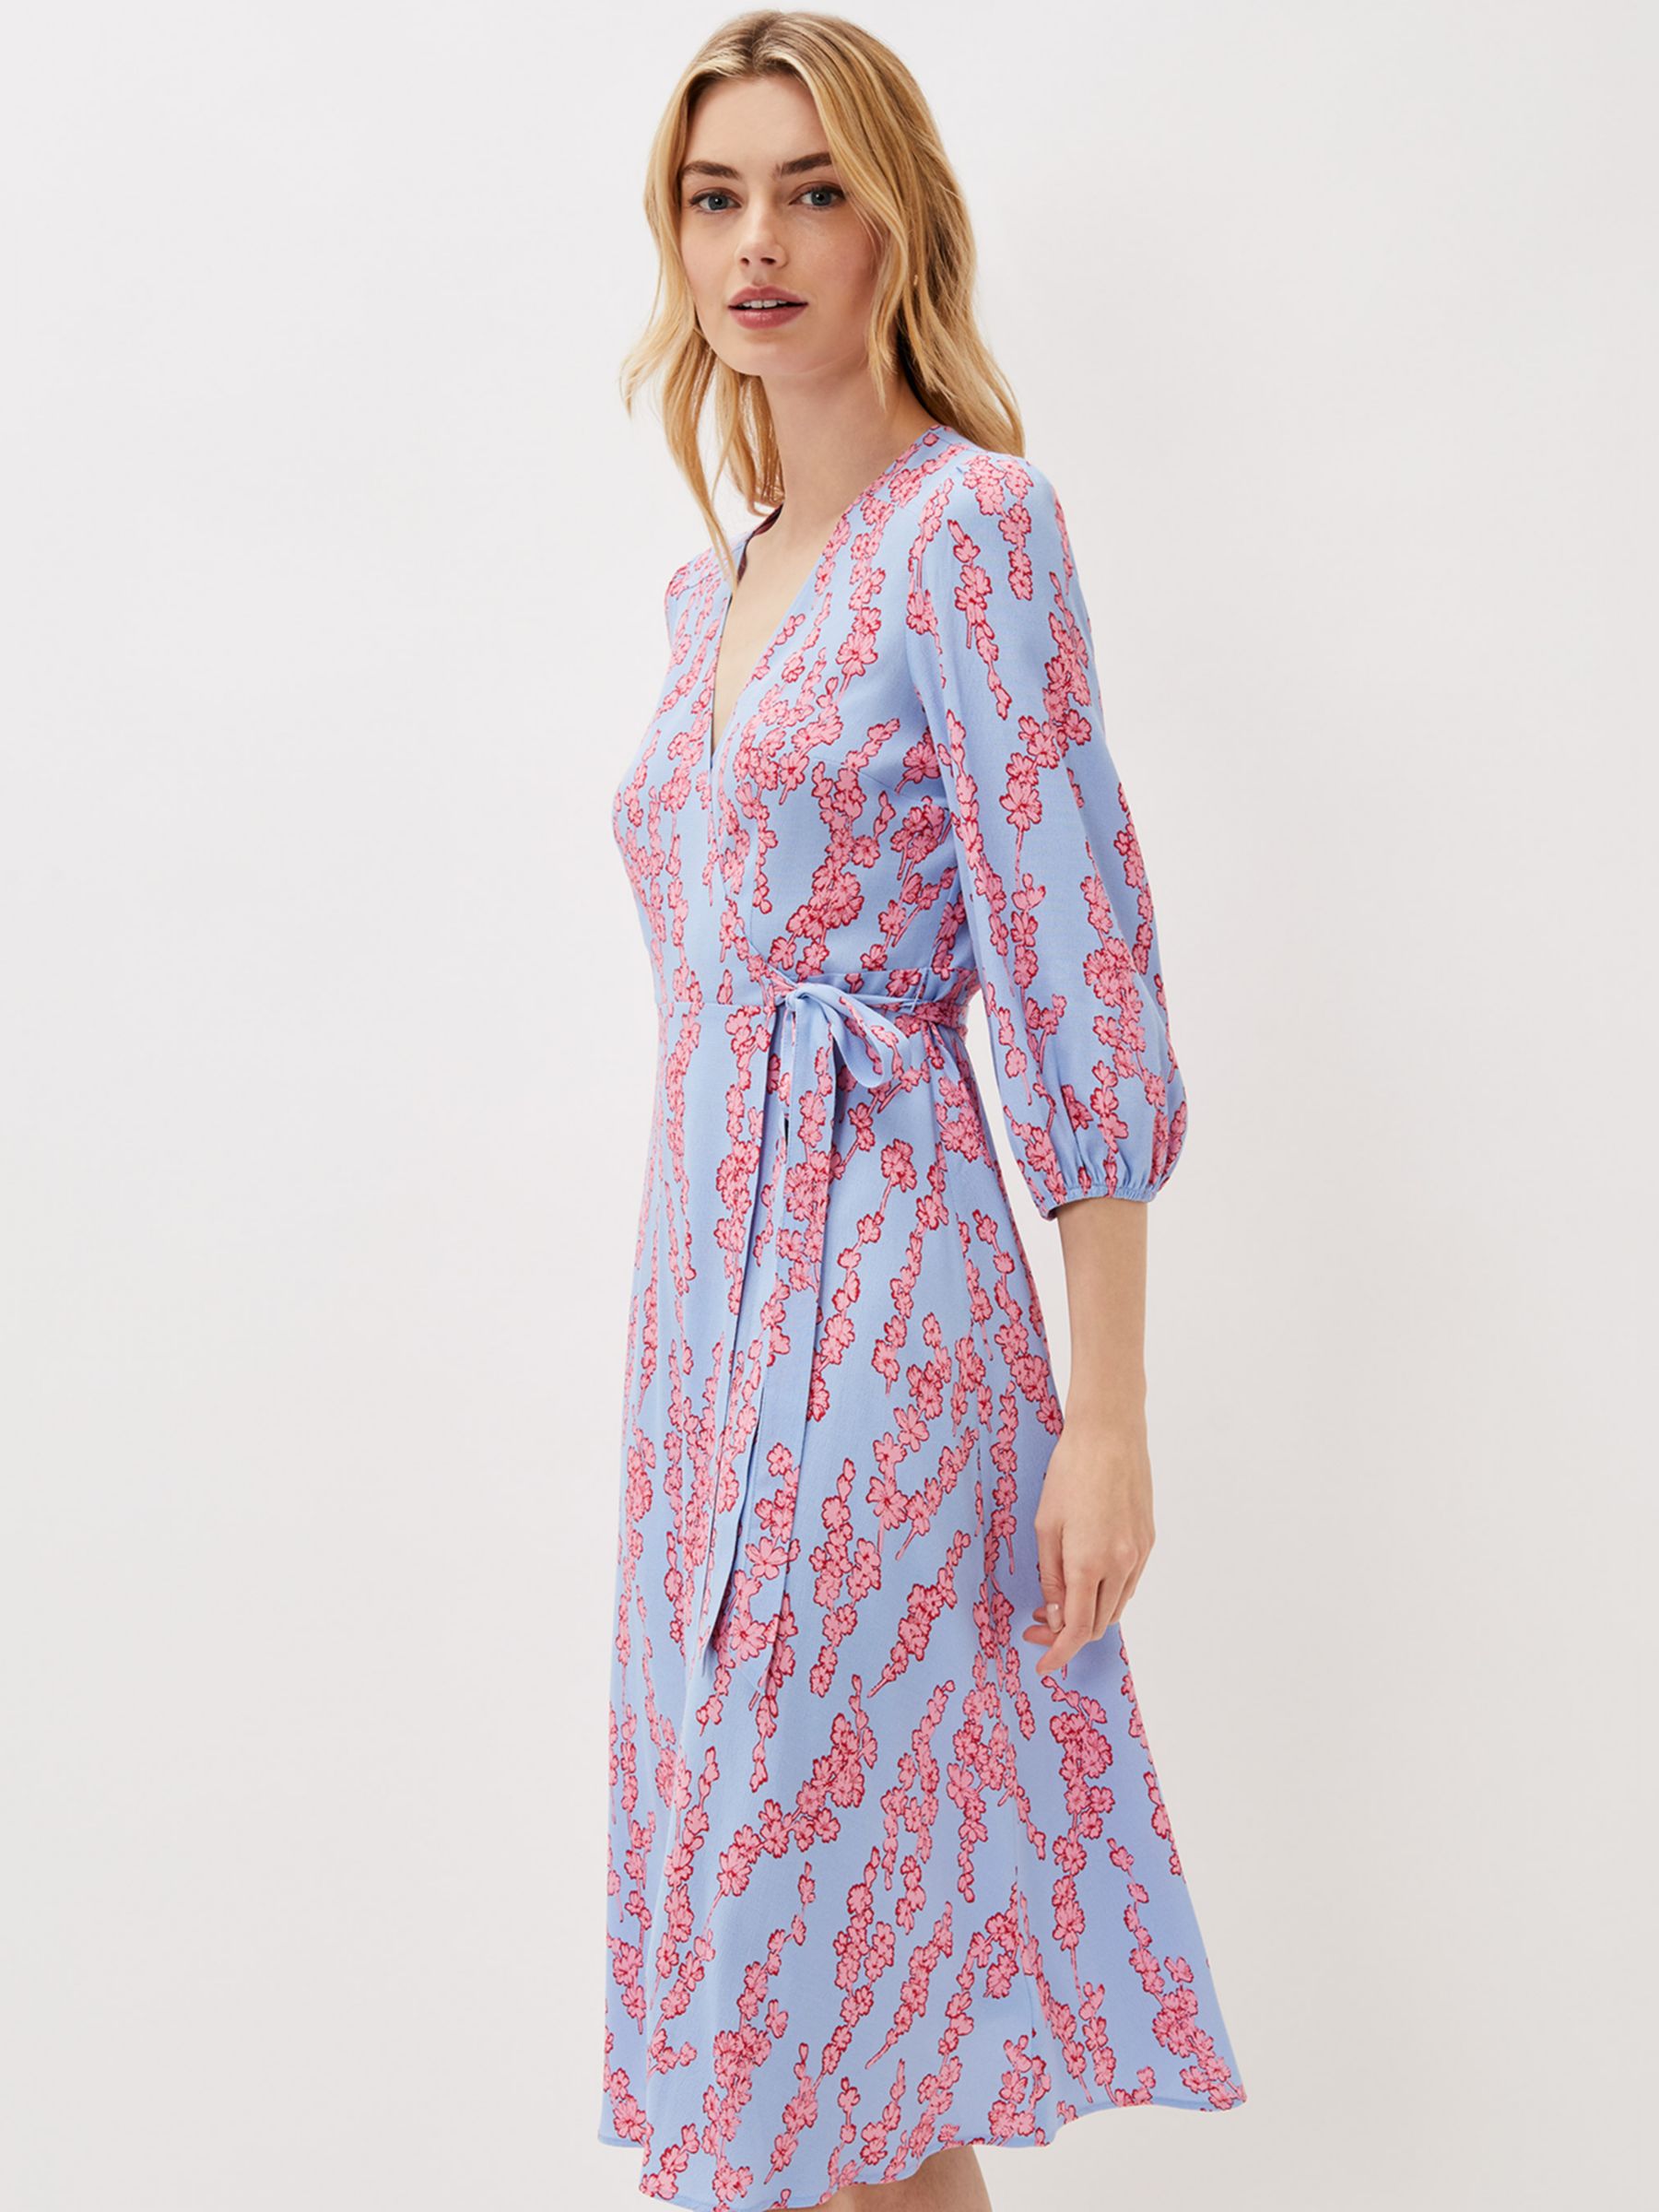 Phase Eight Jean Floral Wrap Midi Dress, Powder Blue/Pink